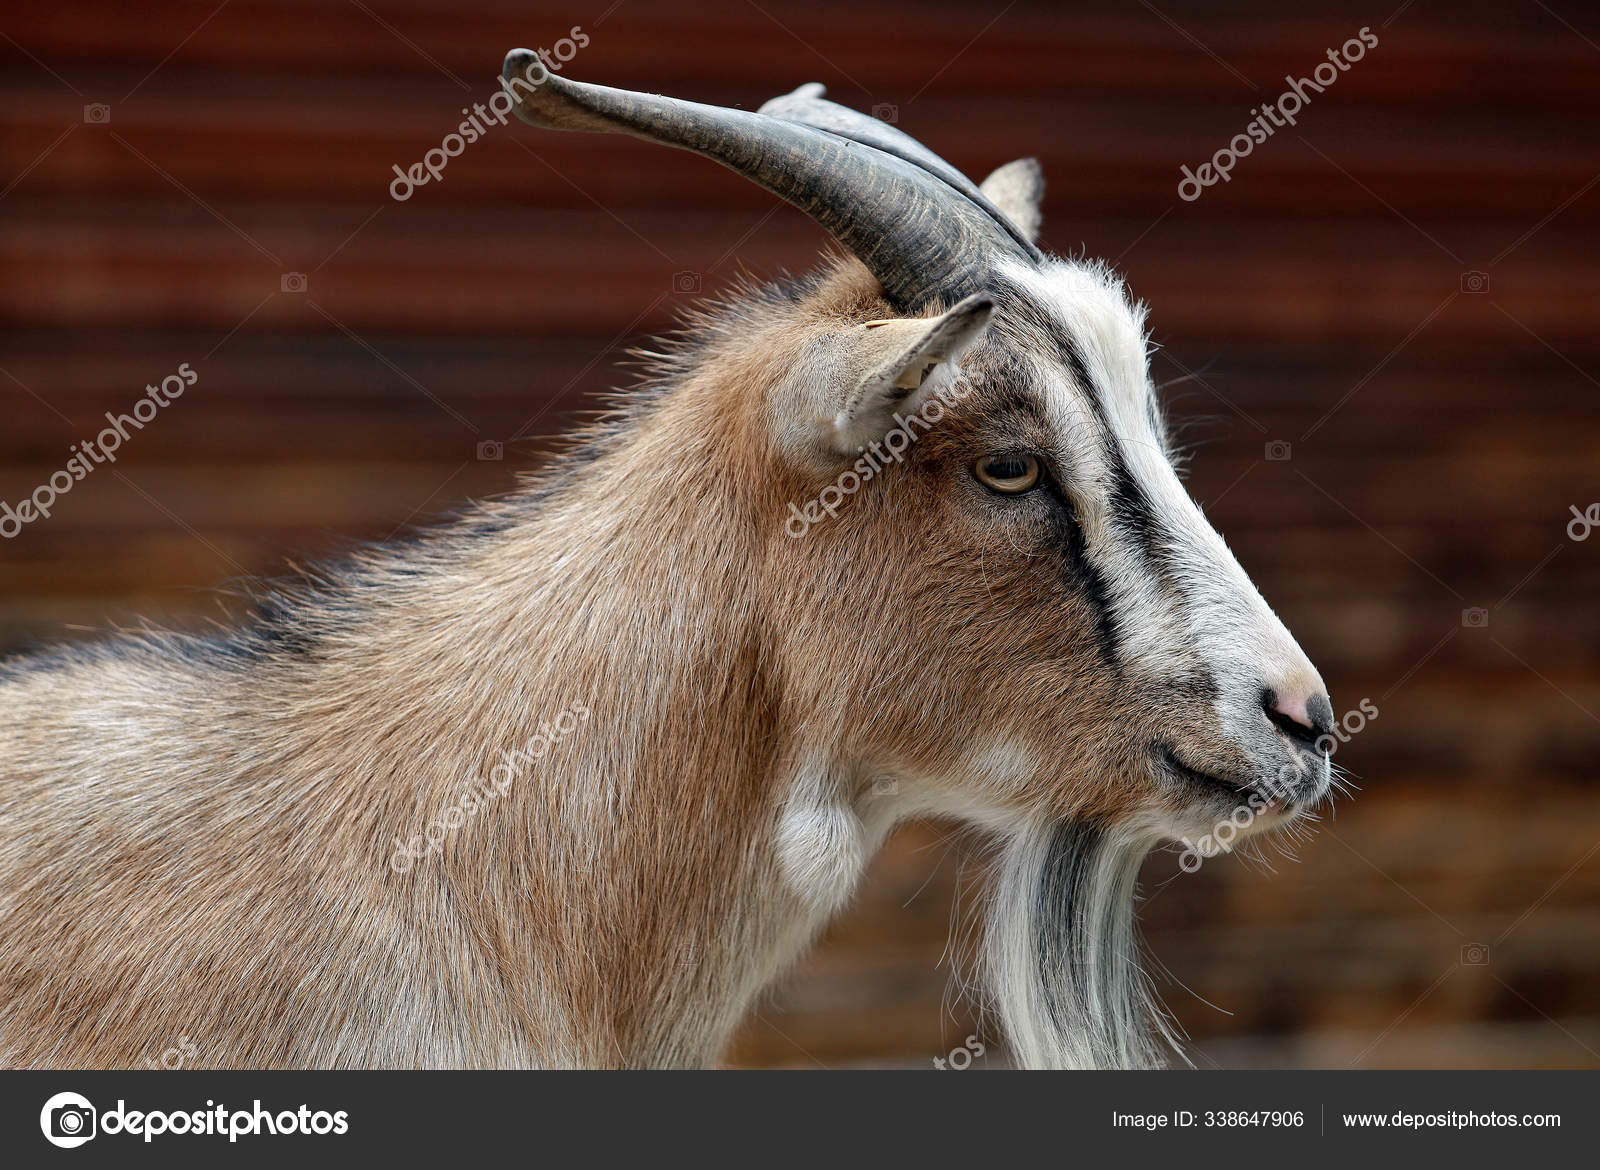 Billy chat goat 🐐 Goat